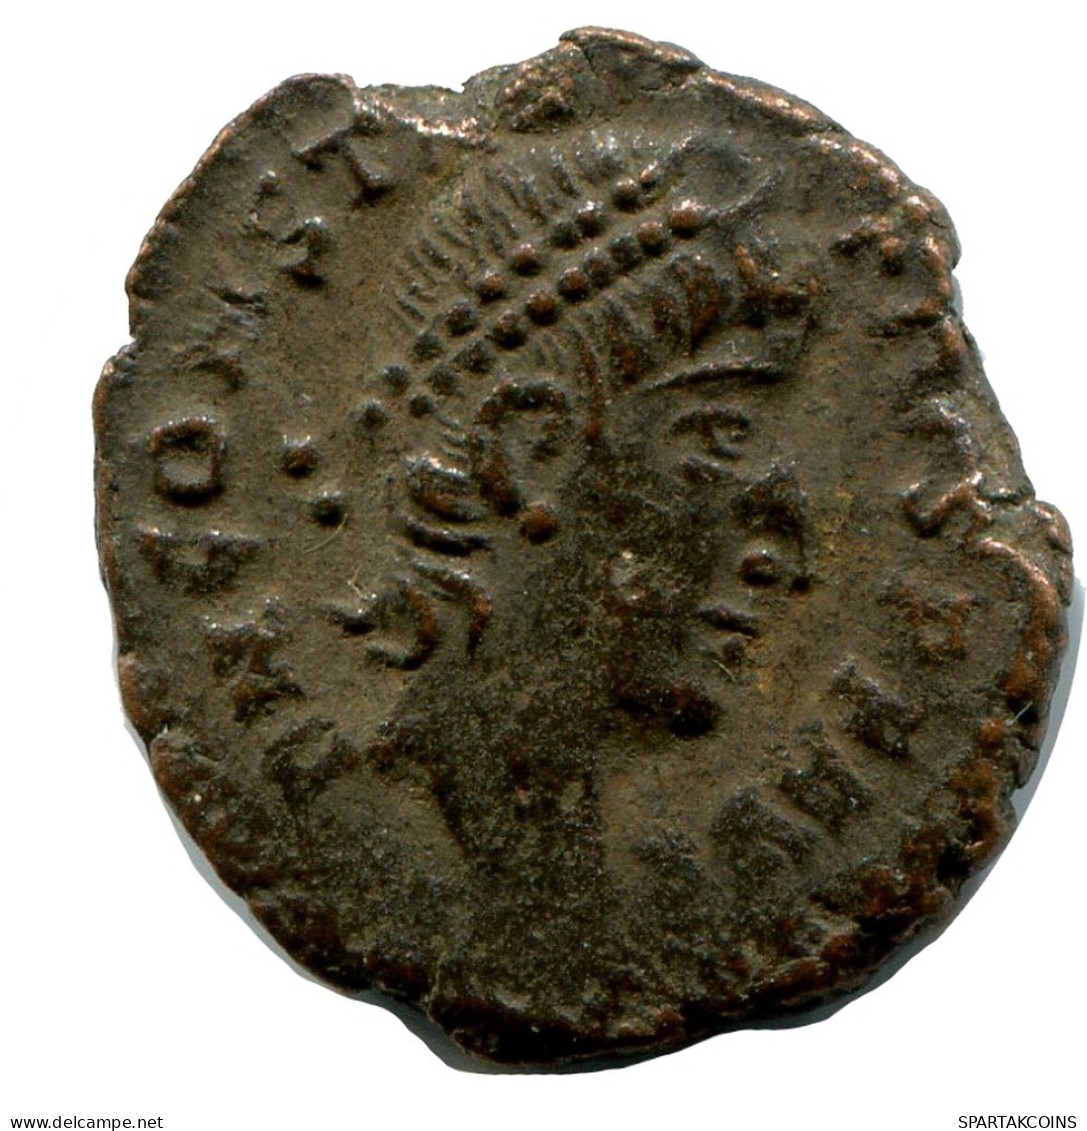 CONSTANTIUS II ALEKSANDRIA FROM THE ROYAL ONTARIO MUSEUM #ANC10210.14.D.A - L'Empire Chrétien (307 à 363)